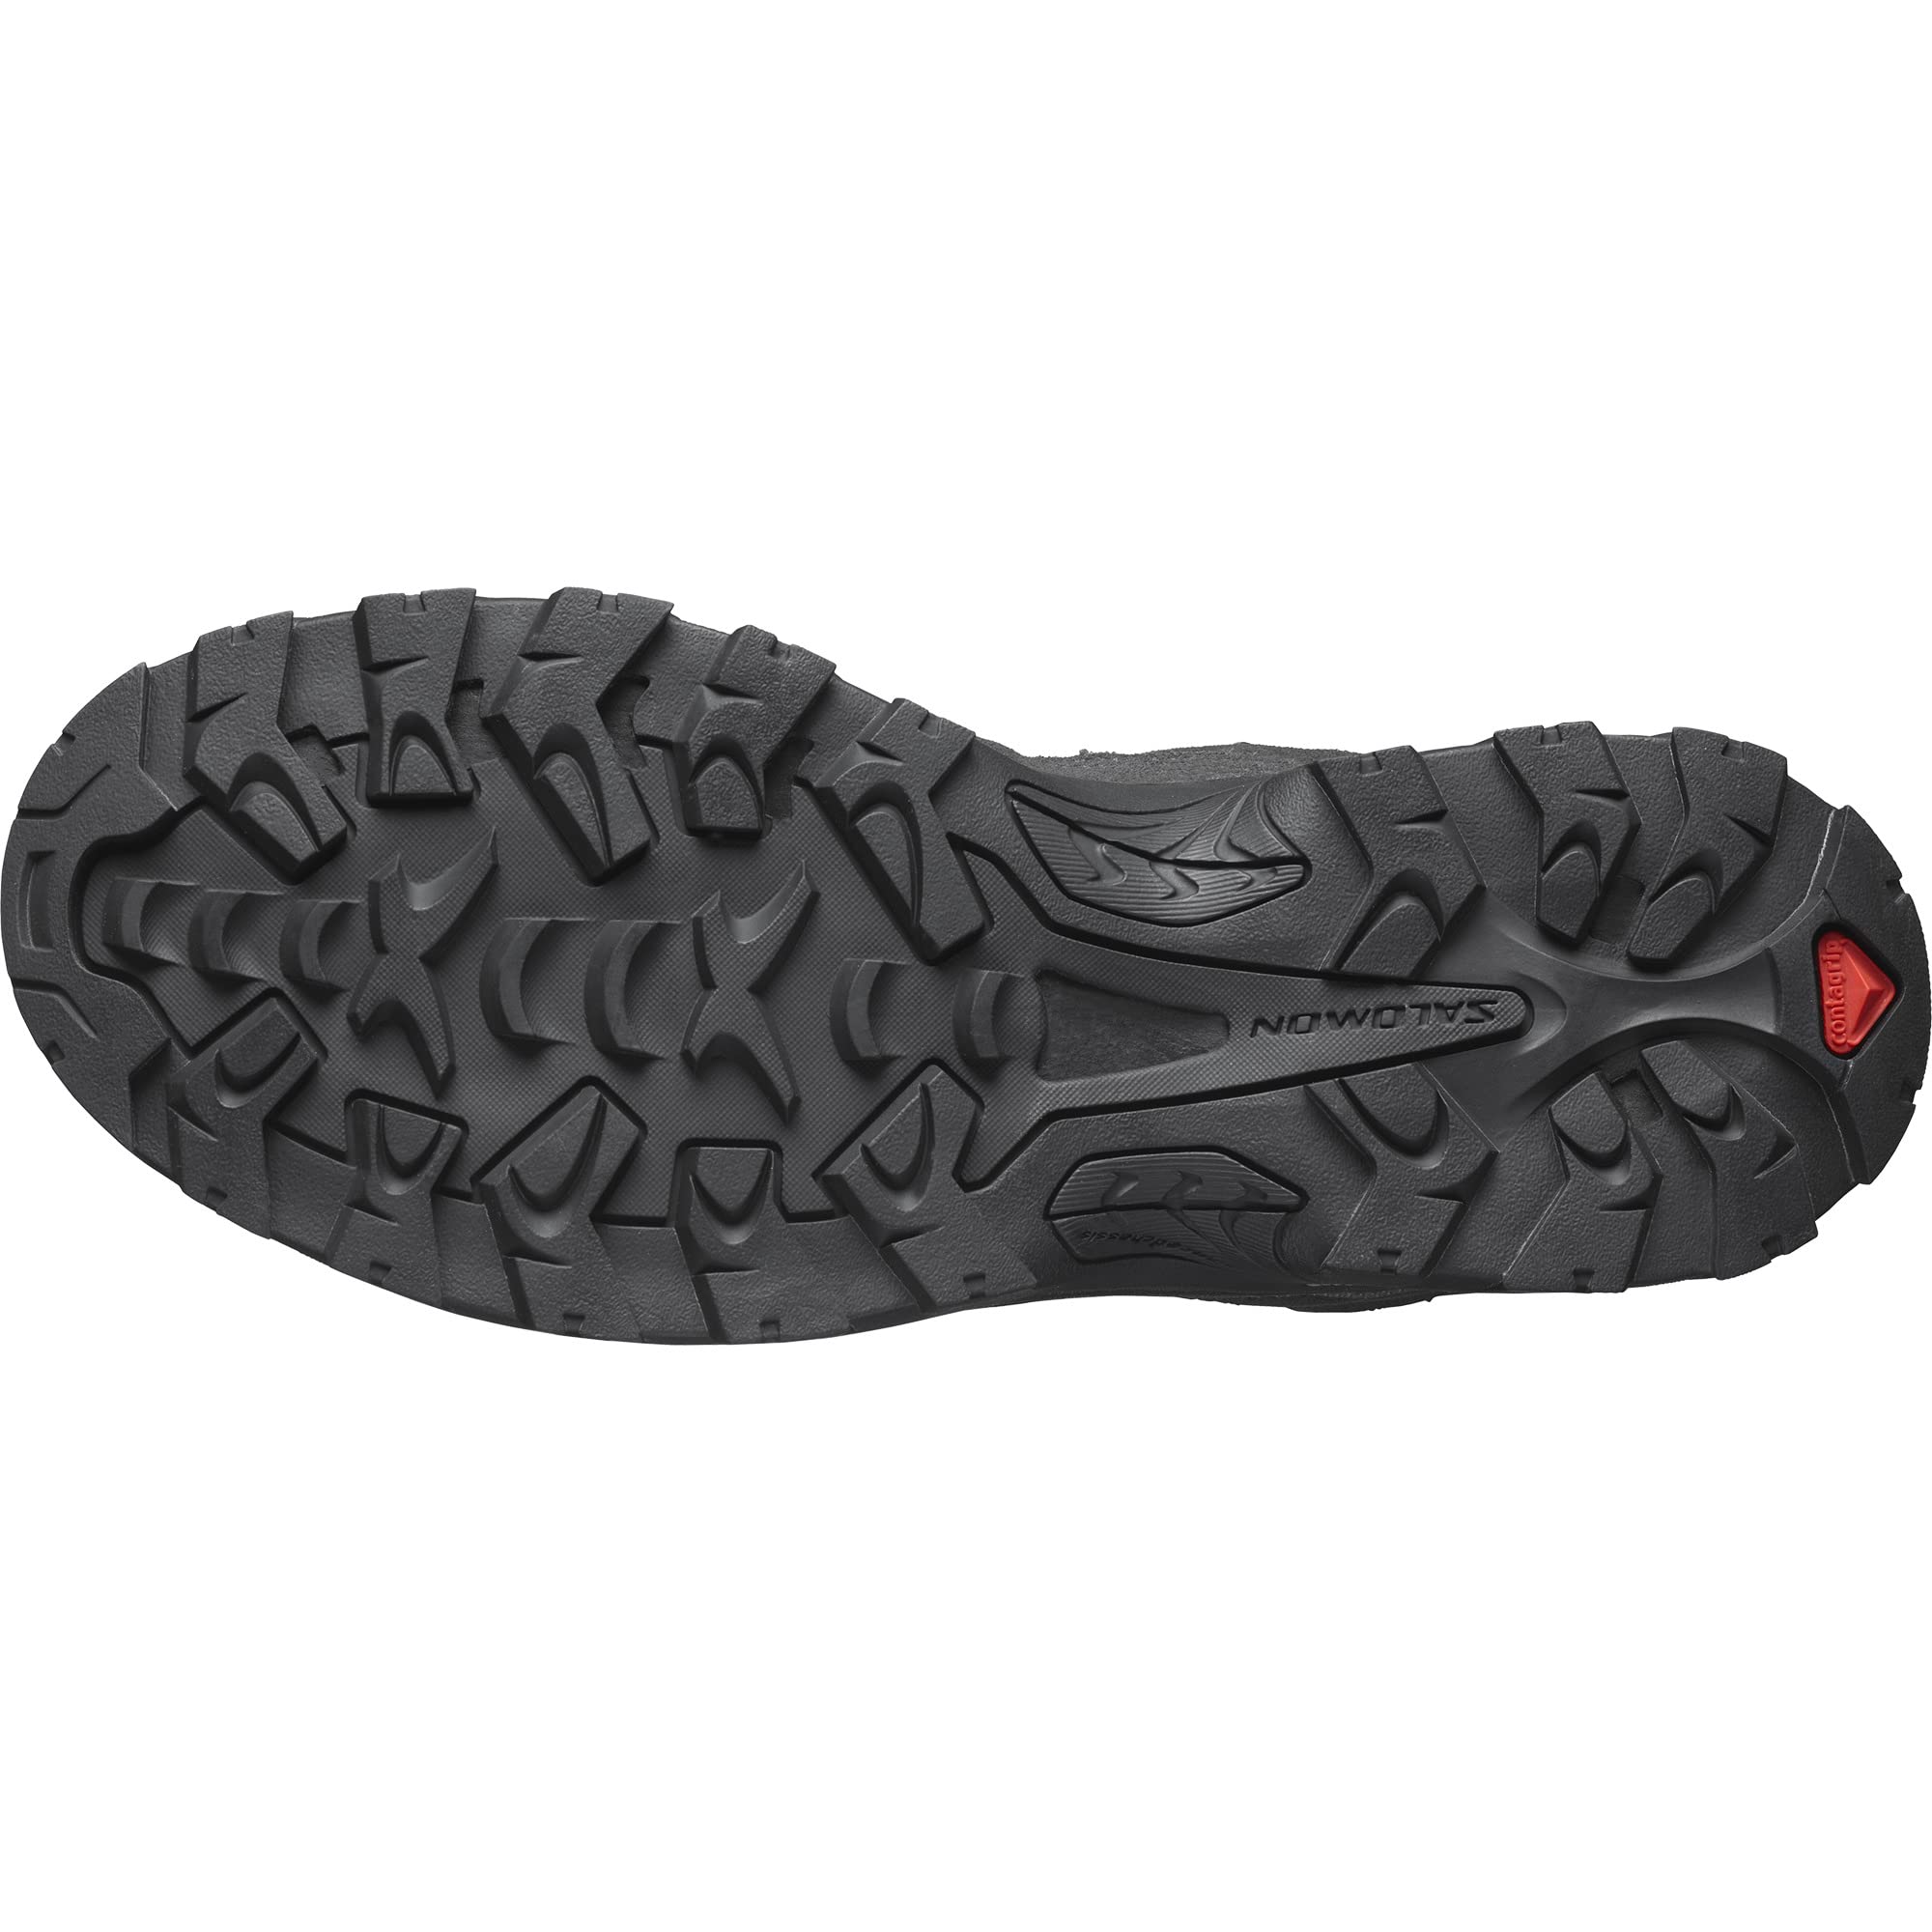 Salomon Men's Quest Rove Gore-tex Trail Running Shoe